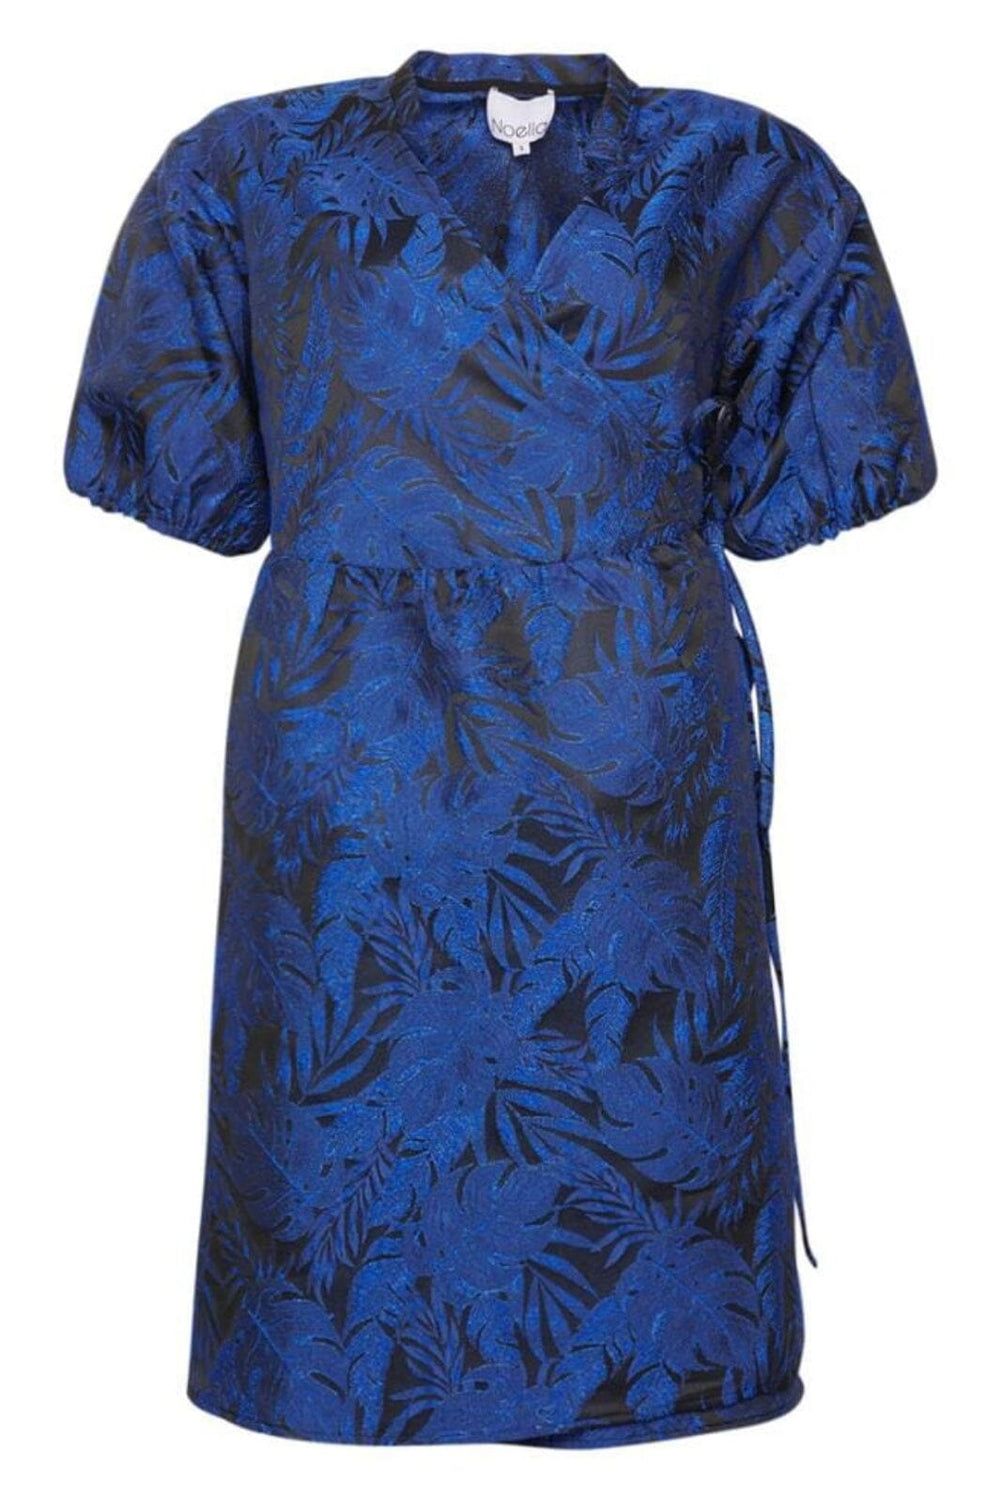 Noella - Alaska Aya Dress - Blue/Black Kjoler 